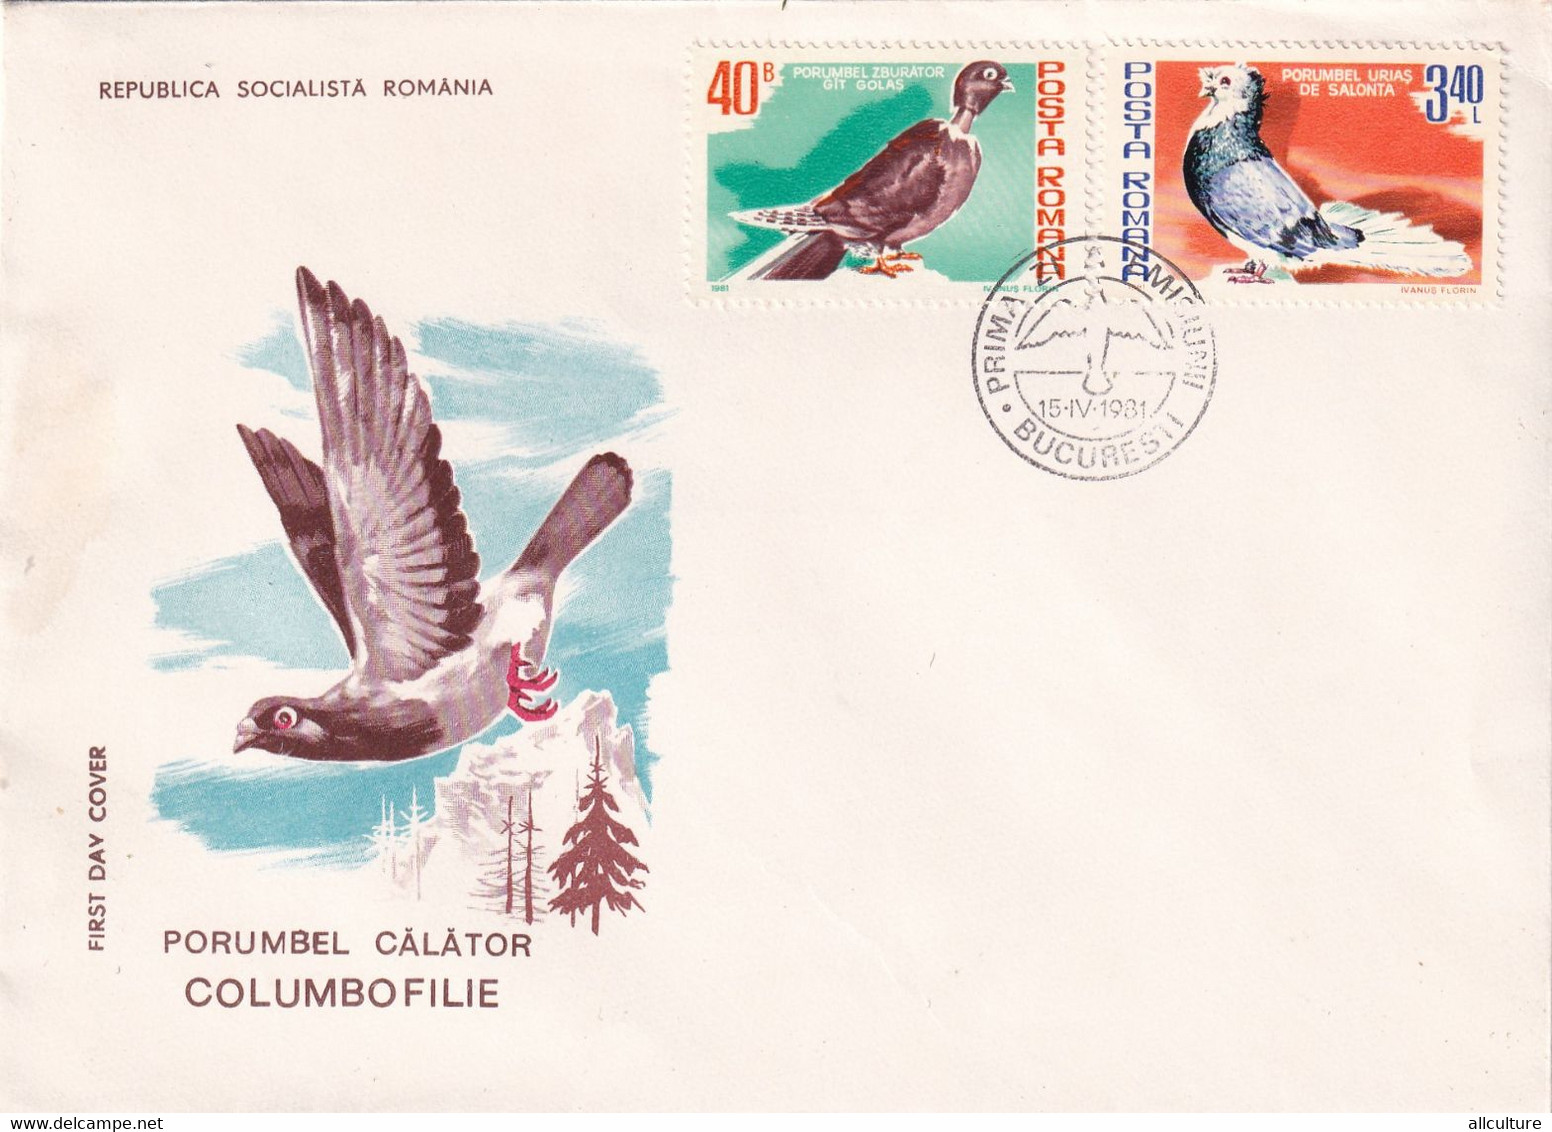 A2921- Columbiformes, Pigeon Birds, Republica Socialista Romania, Bucuresti 1981  3 Covers FDC - Columbiformes